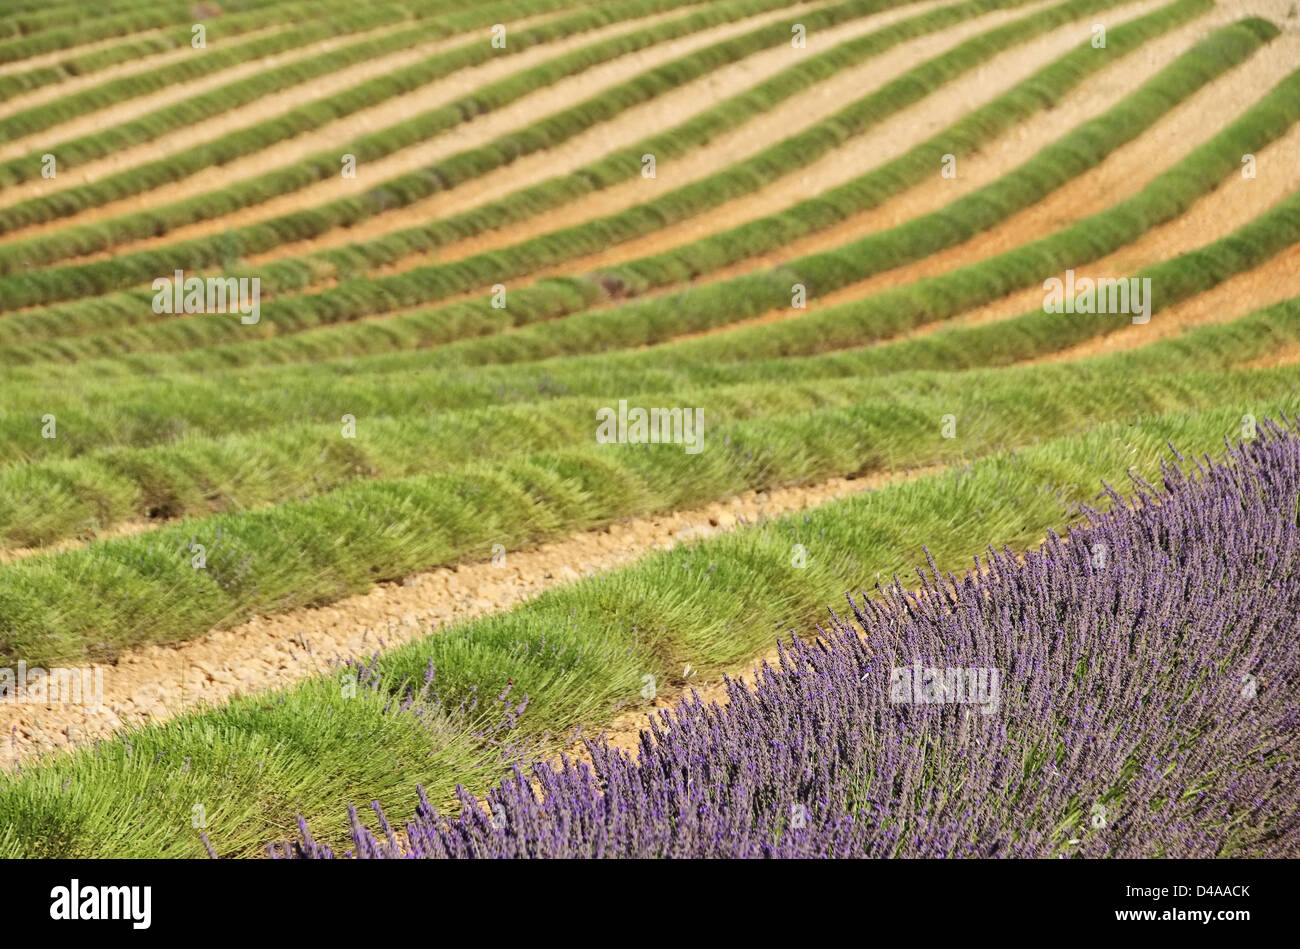 Lavendelfeld Ernte - lavender field harvest 18 Stock Photo